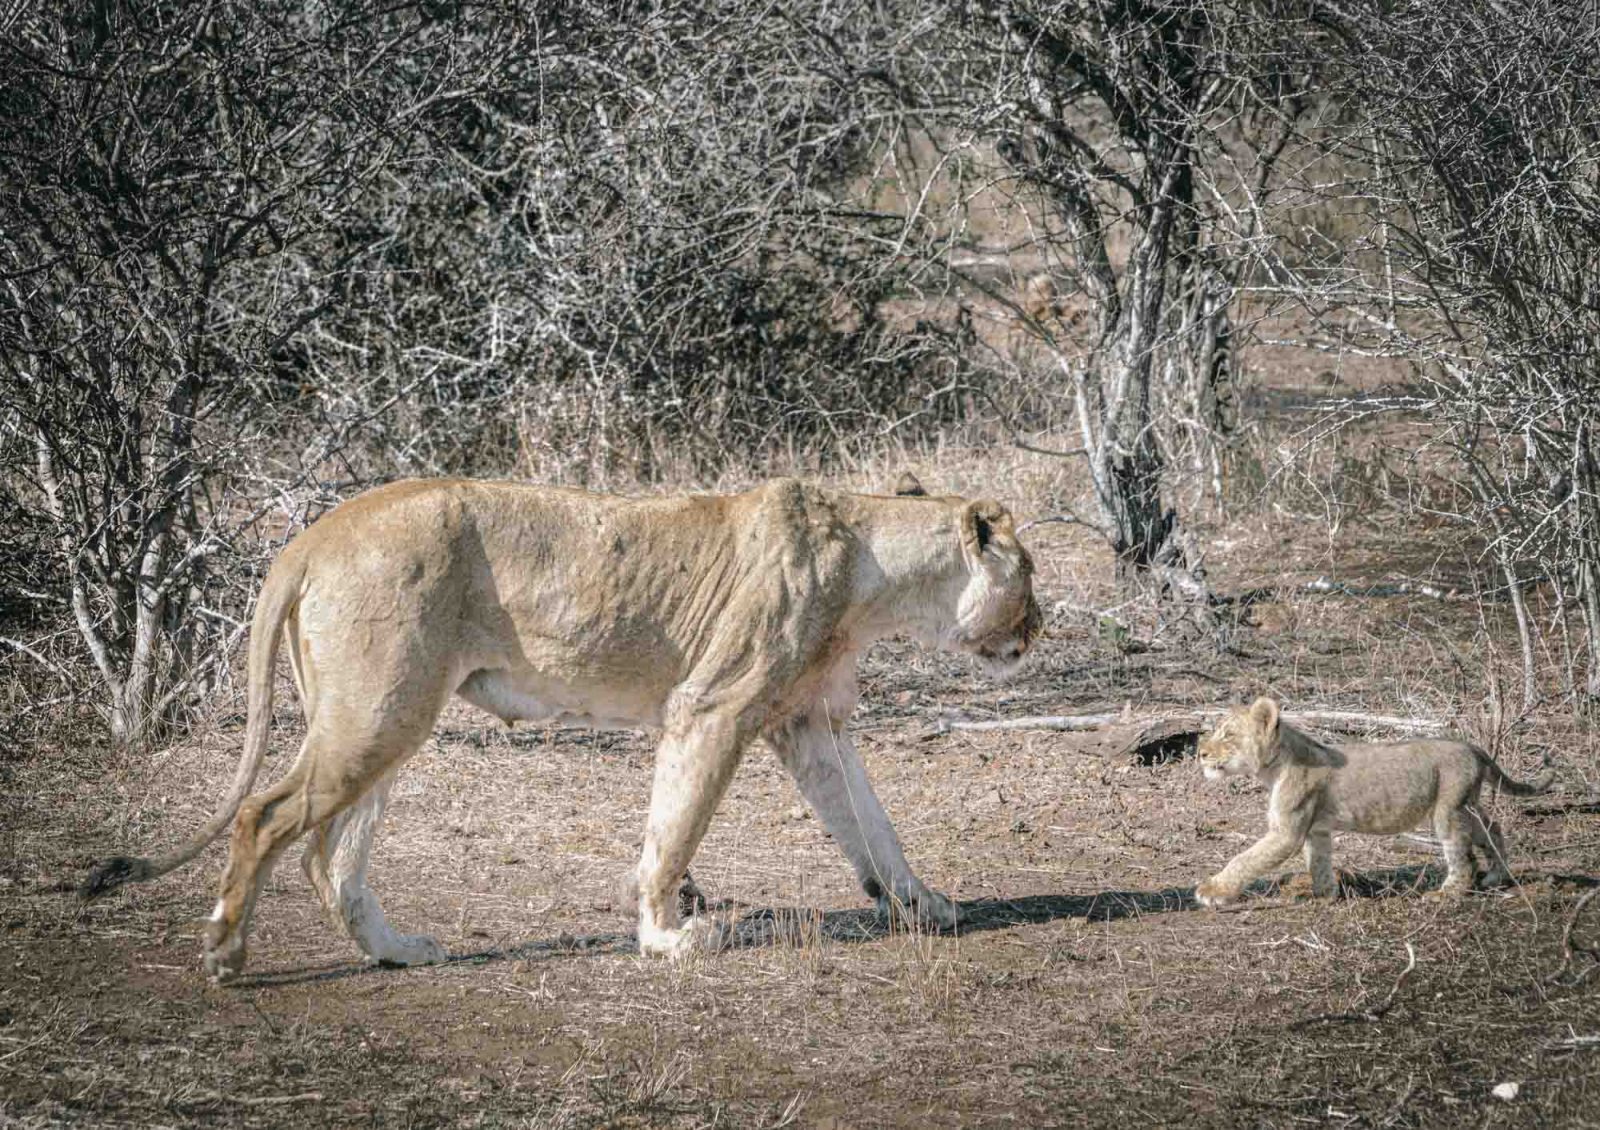 South Africa Kruger Singita safari lions 02930